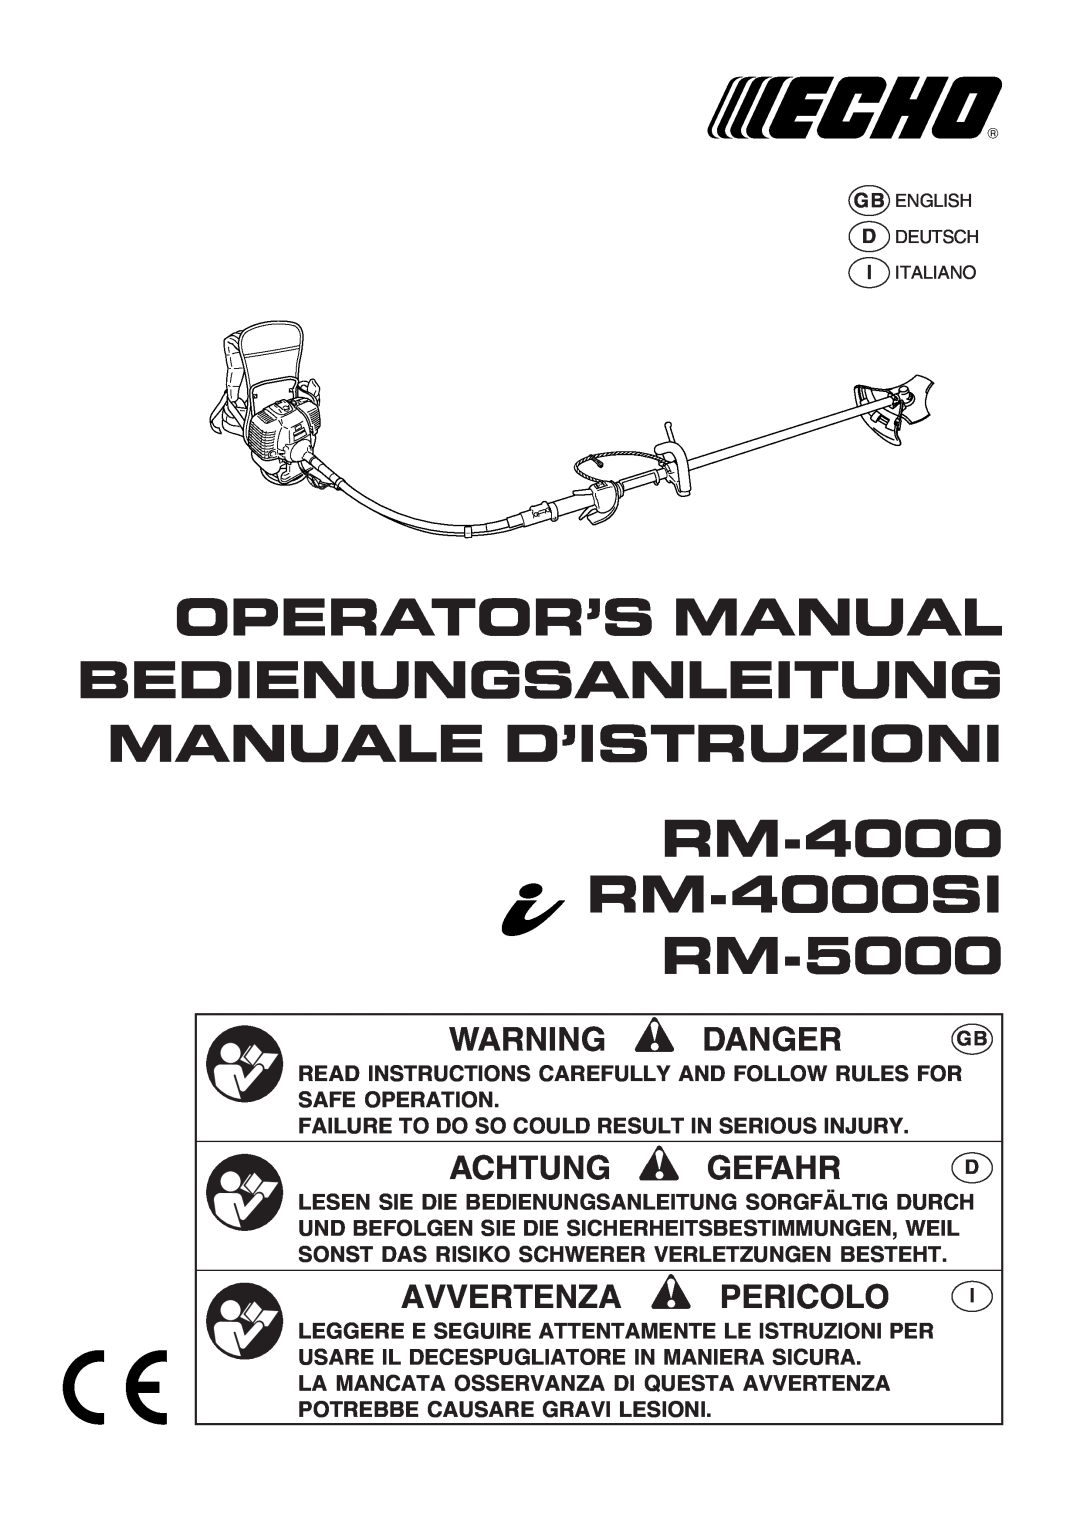 Echo manual RM-4000 RM-4000SI RM-5000, Warning Danger, Achtung Gefahr, Avvertenza Pericolo 